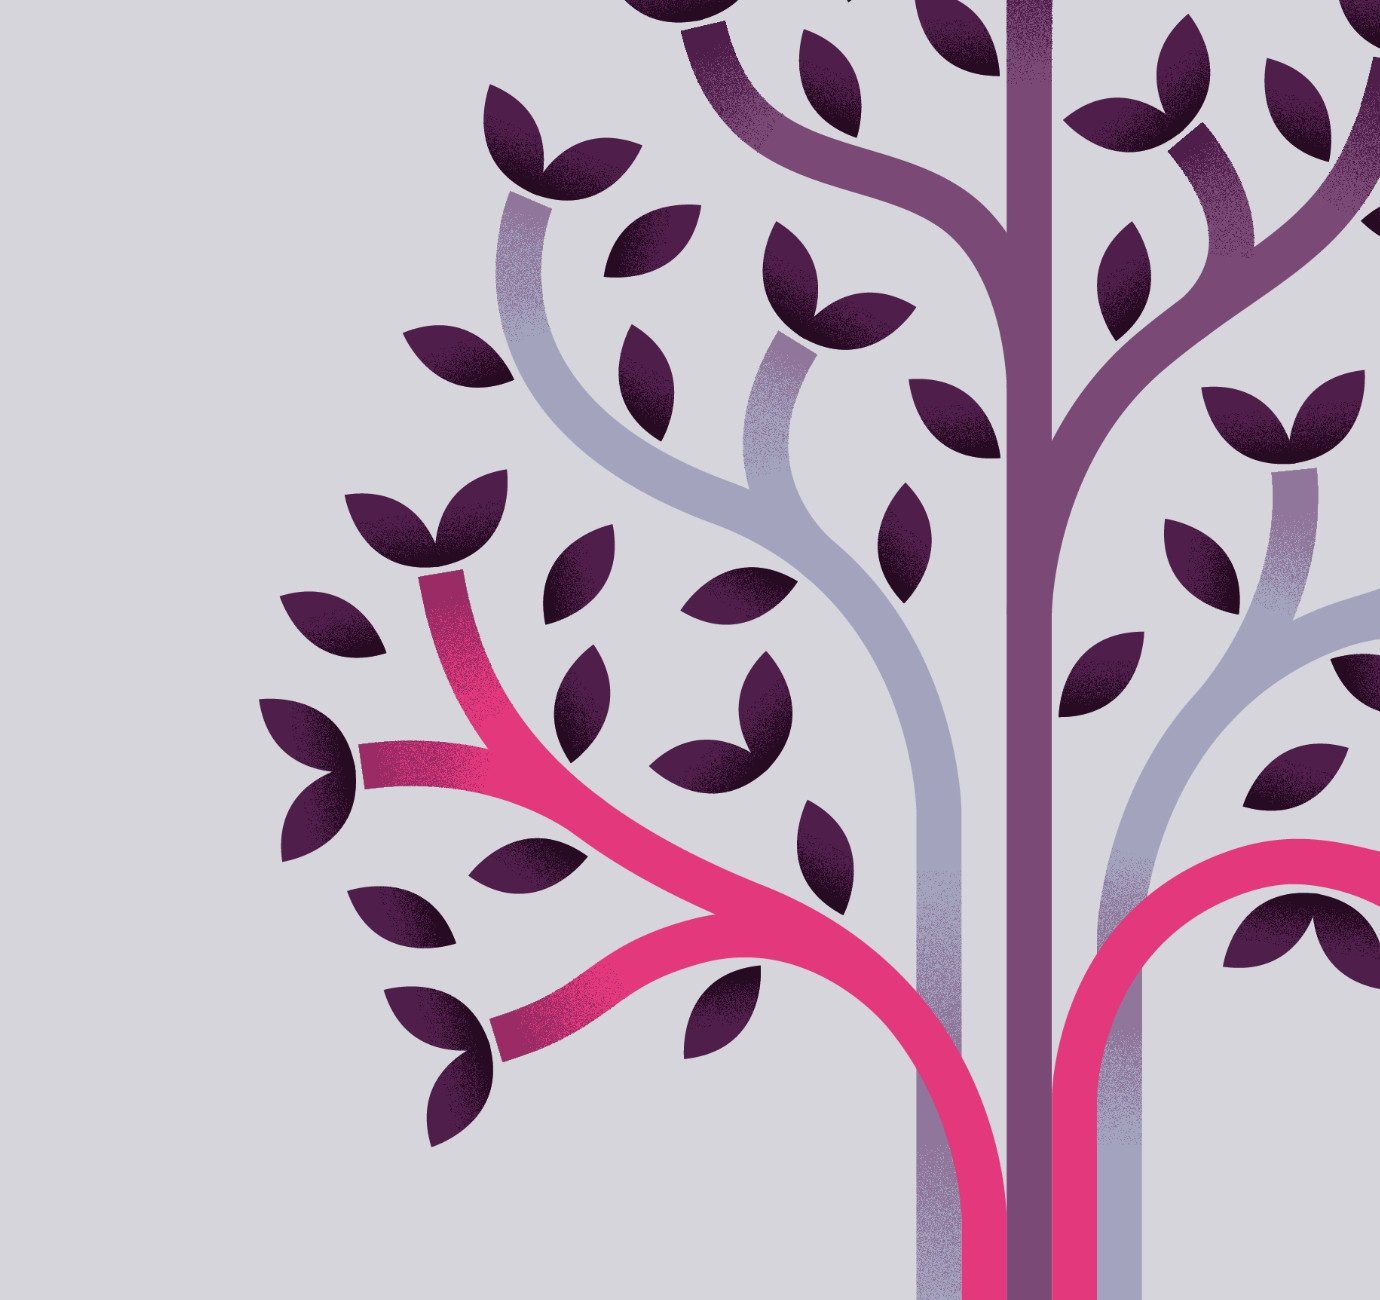 LCF Law tree illustration design by Root Studio